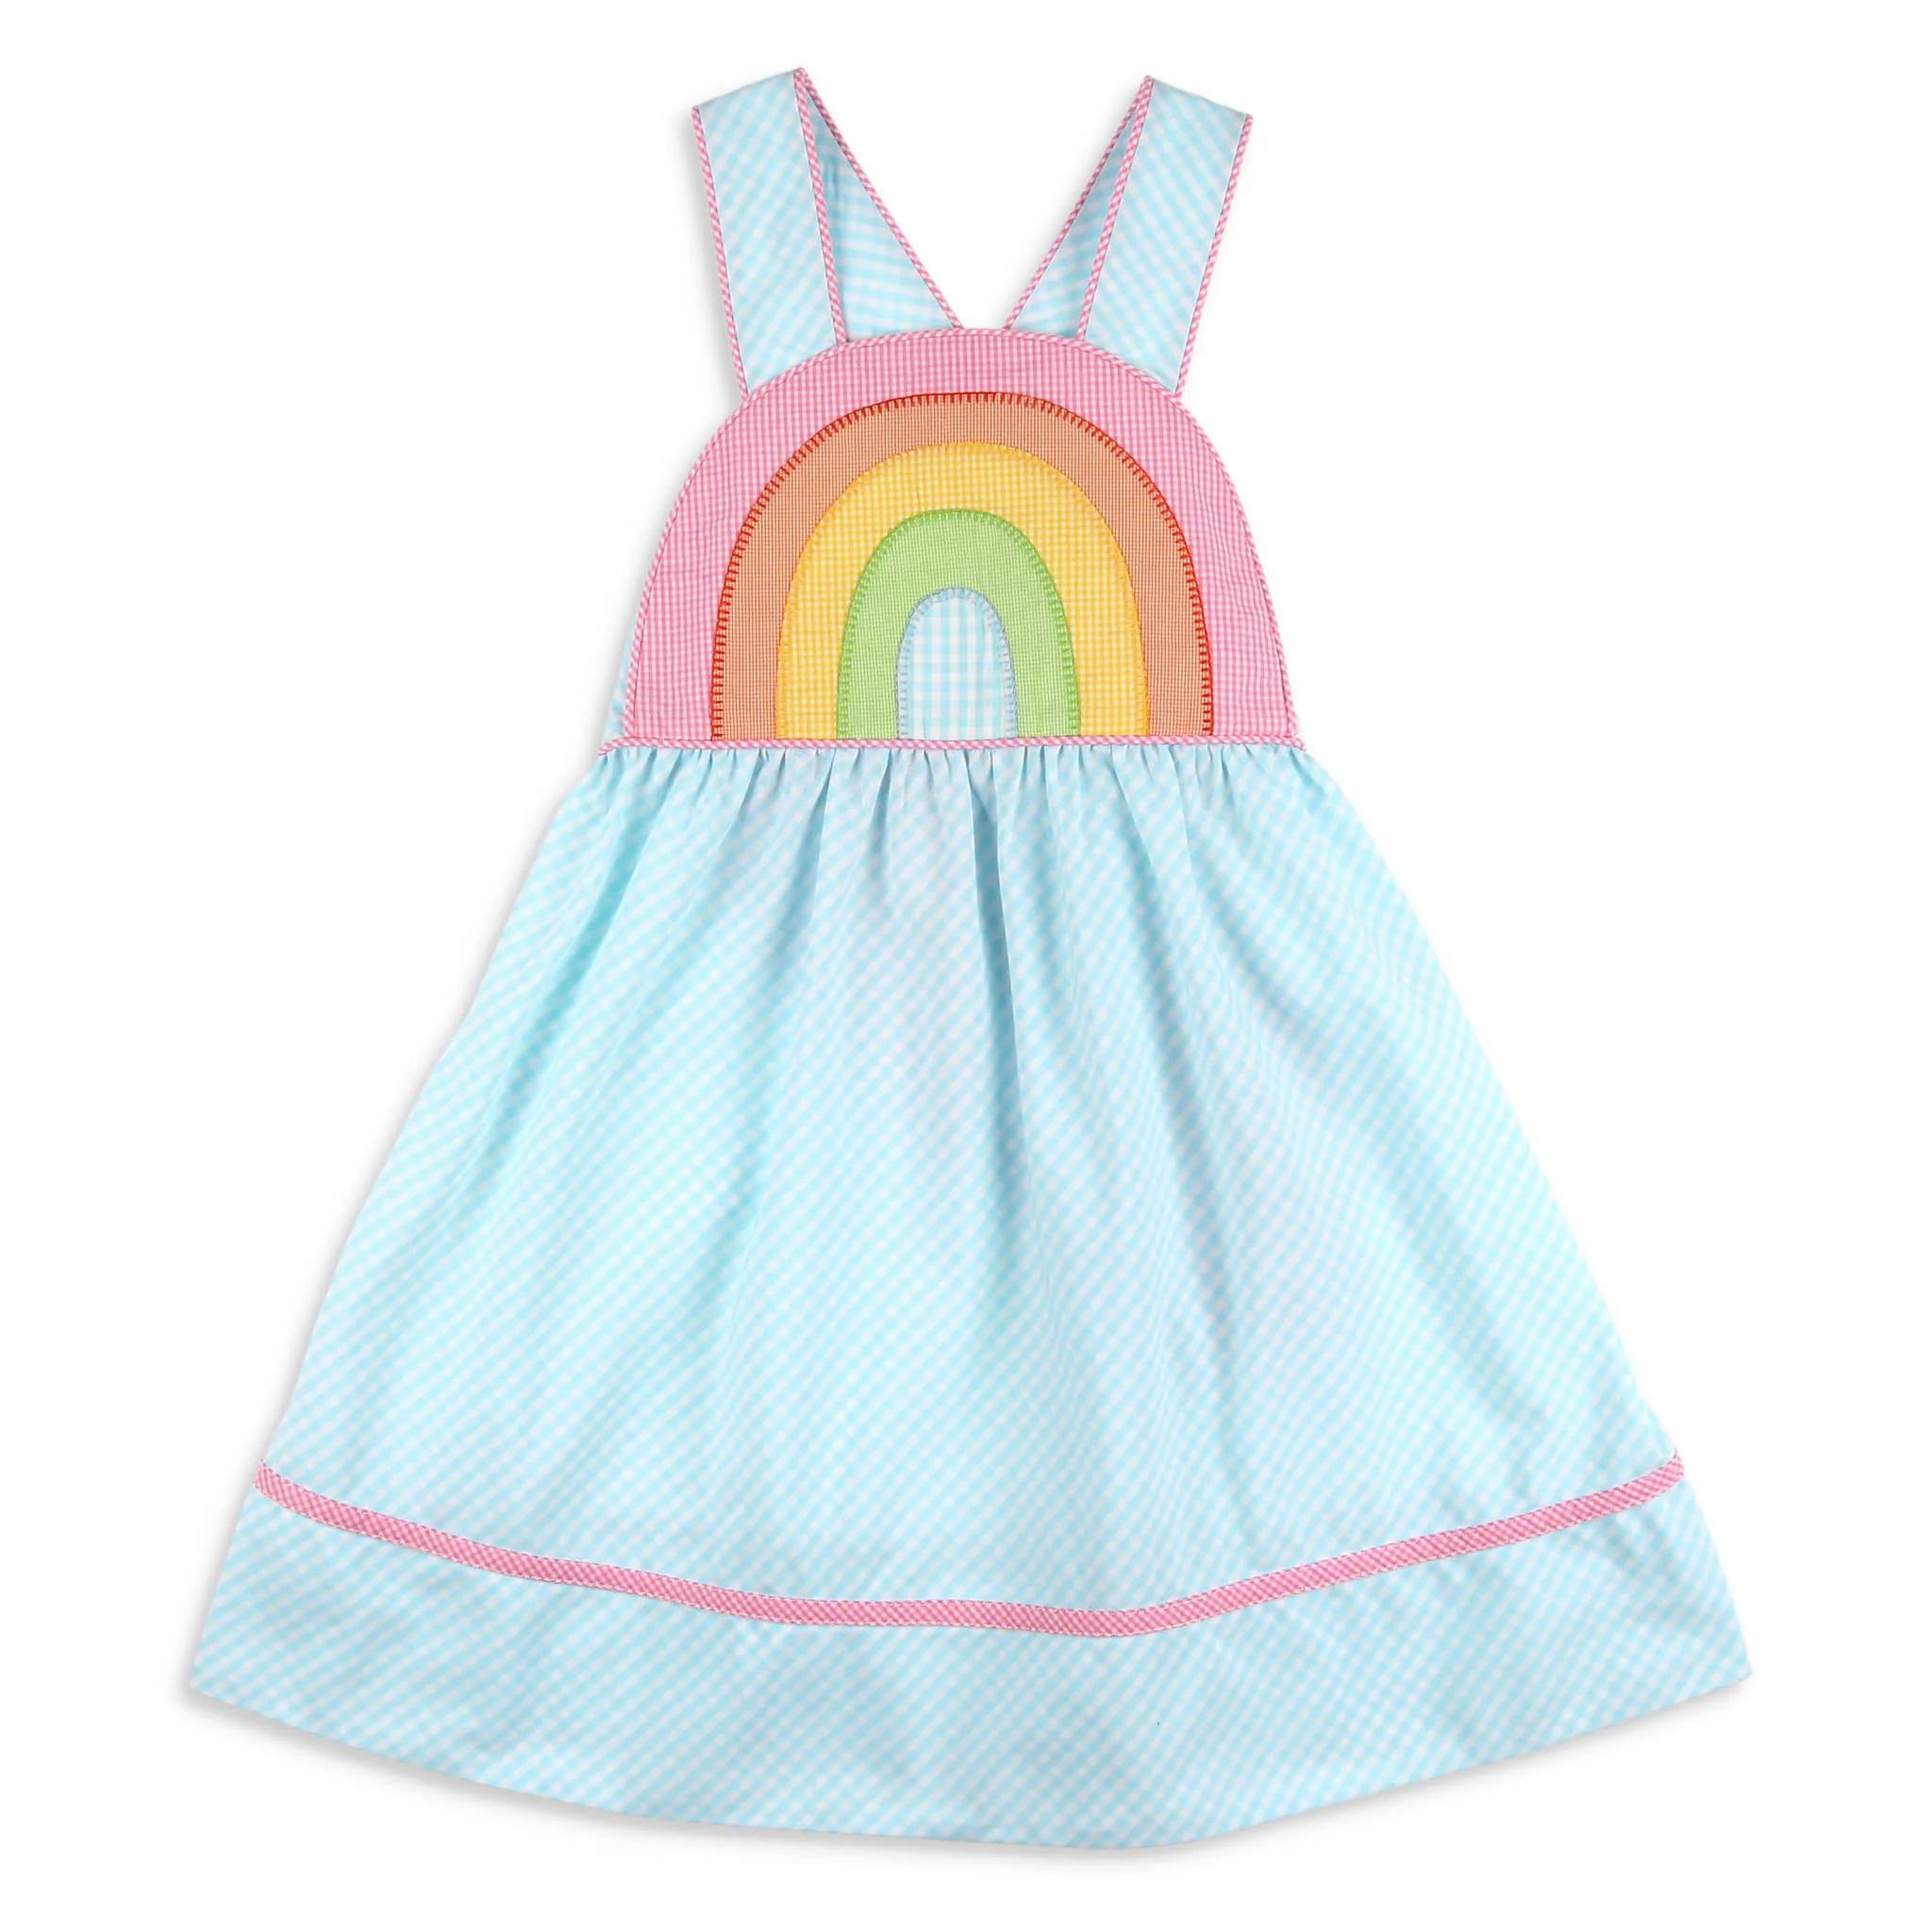 Girls Rainbow Sun Dress - Shrimp and Grits Kids | Shrimp and Grits Kids